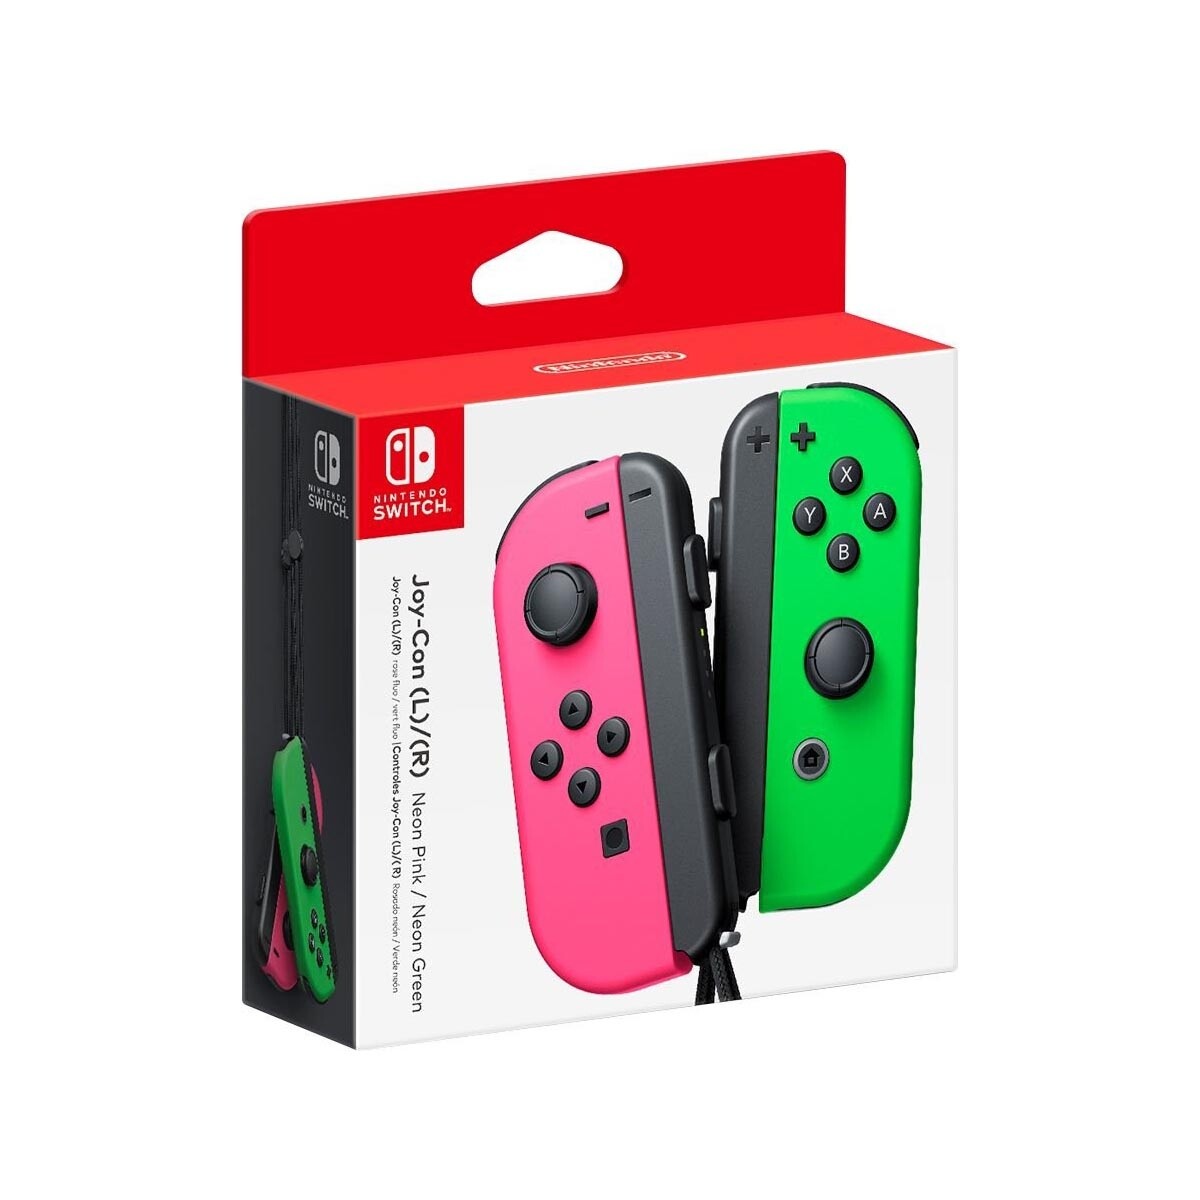 Controles Joystick JOY-CON (L) / (R) para Nintendo Switch Neon green-pink